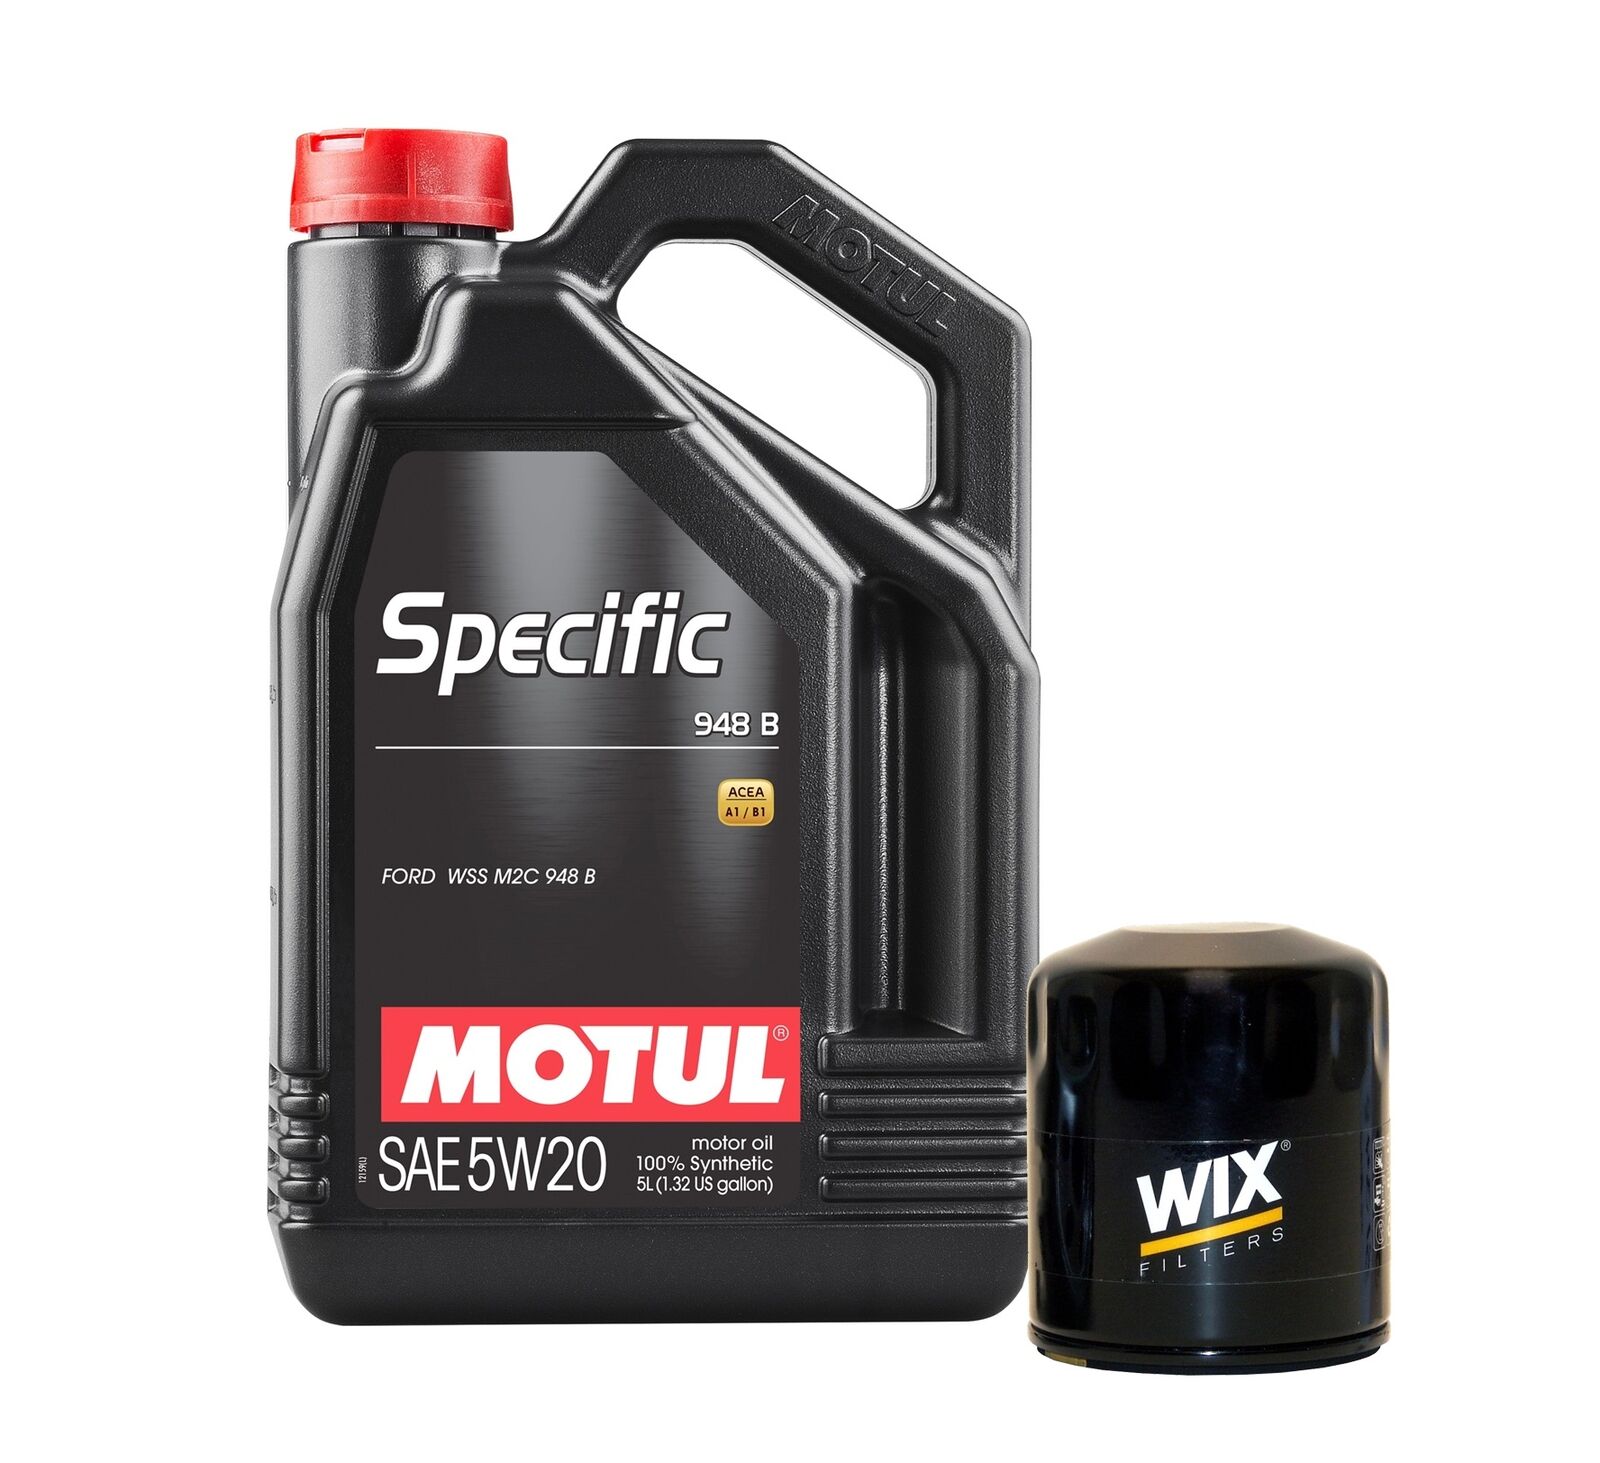 5L Motul SPECIFIC 948B 5W20 Wix Filter Motor Oil Change Kit API SN